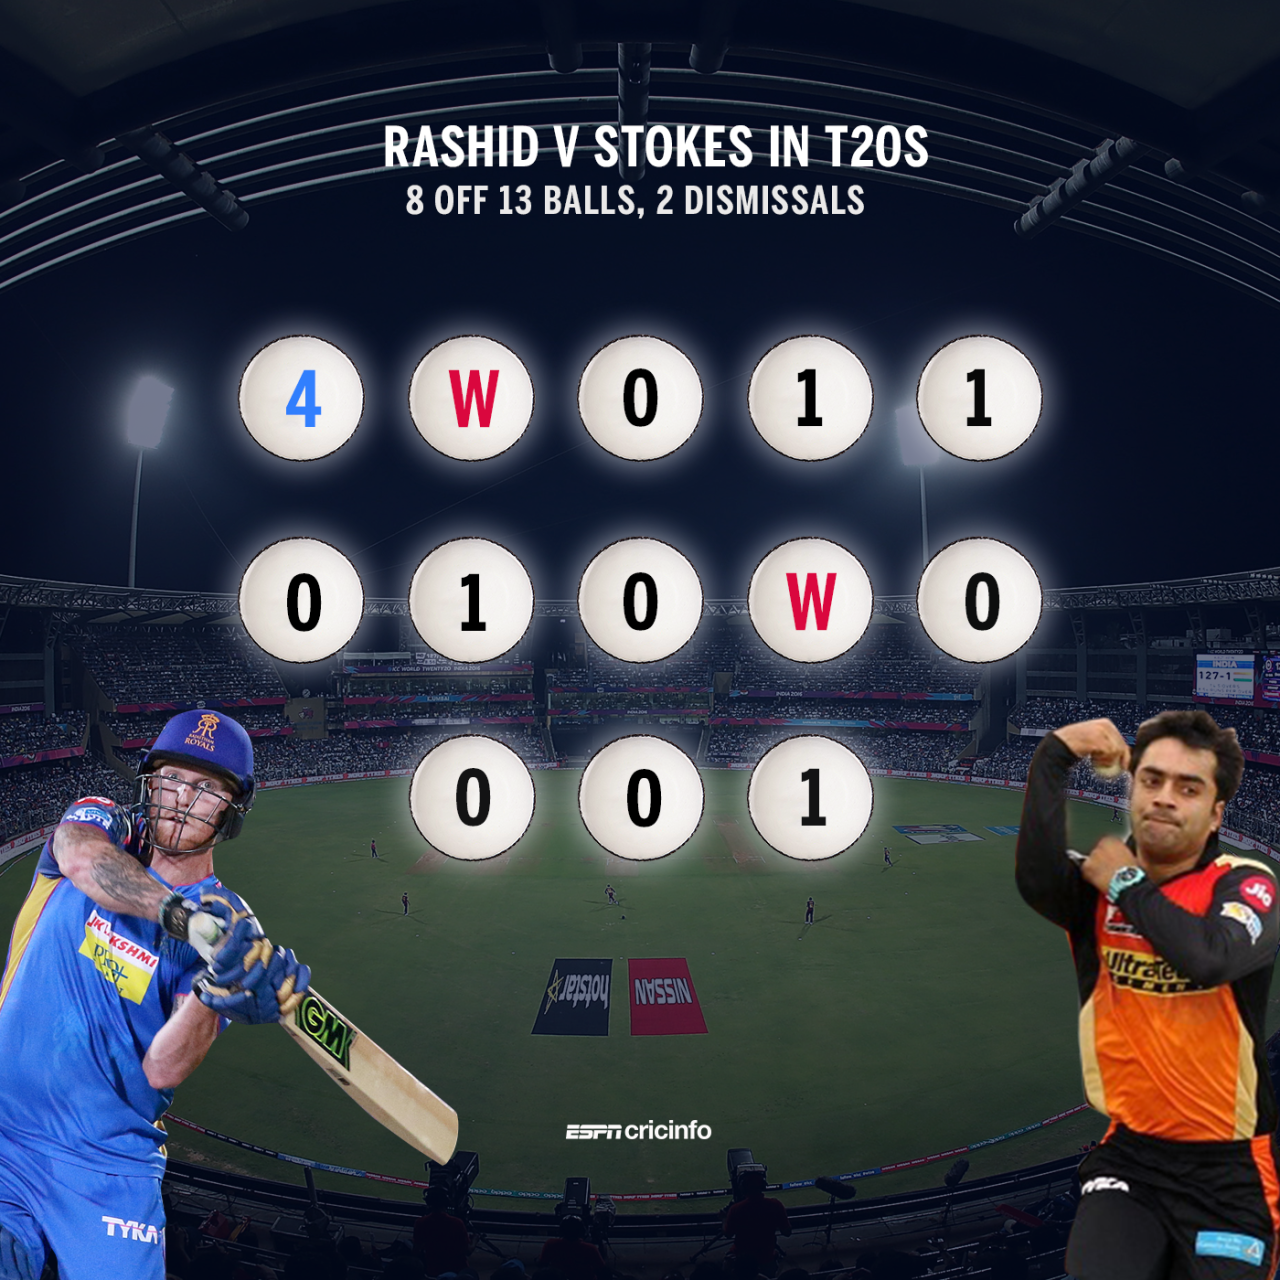 Rashid Khan has had Ben Stokes' number in T20s 